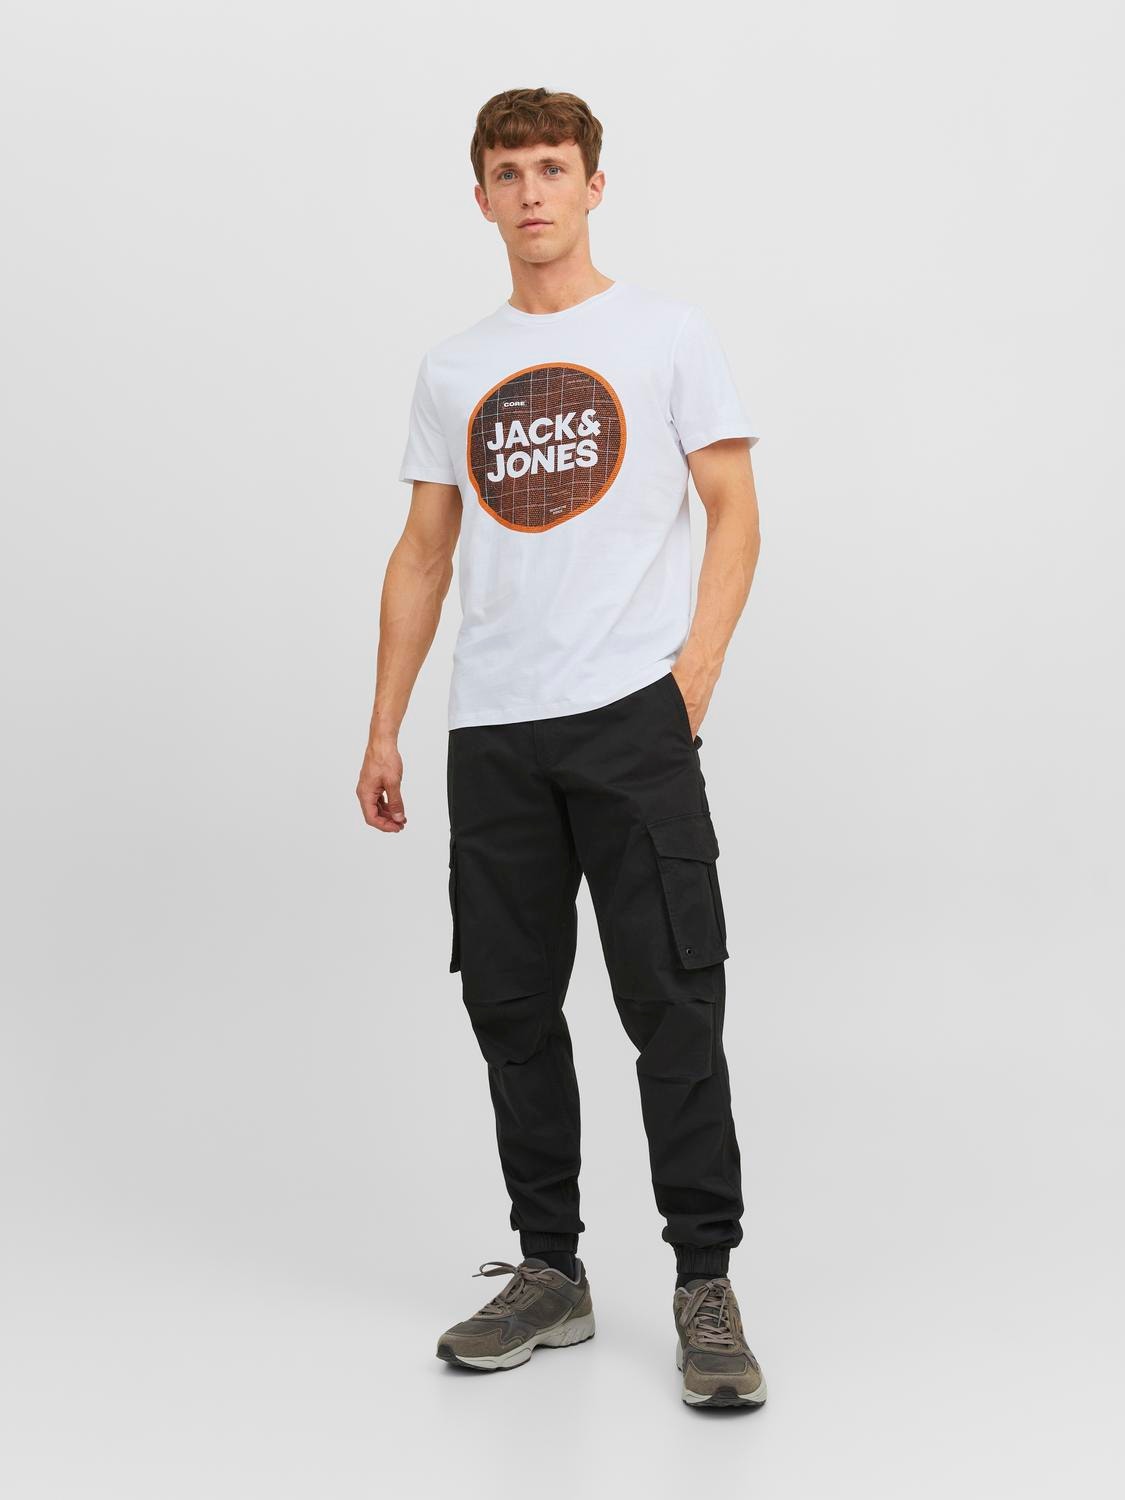 Jack & Jones Logo Rundhals T-shirt -White - 12234361